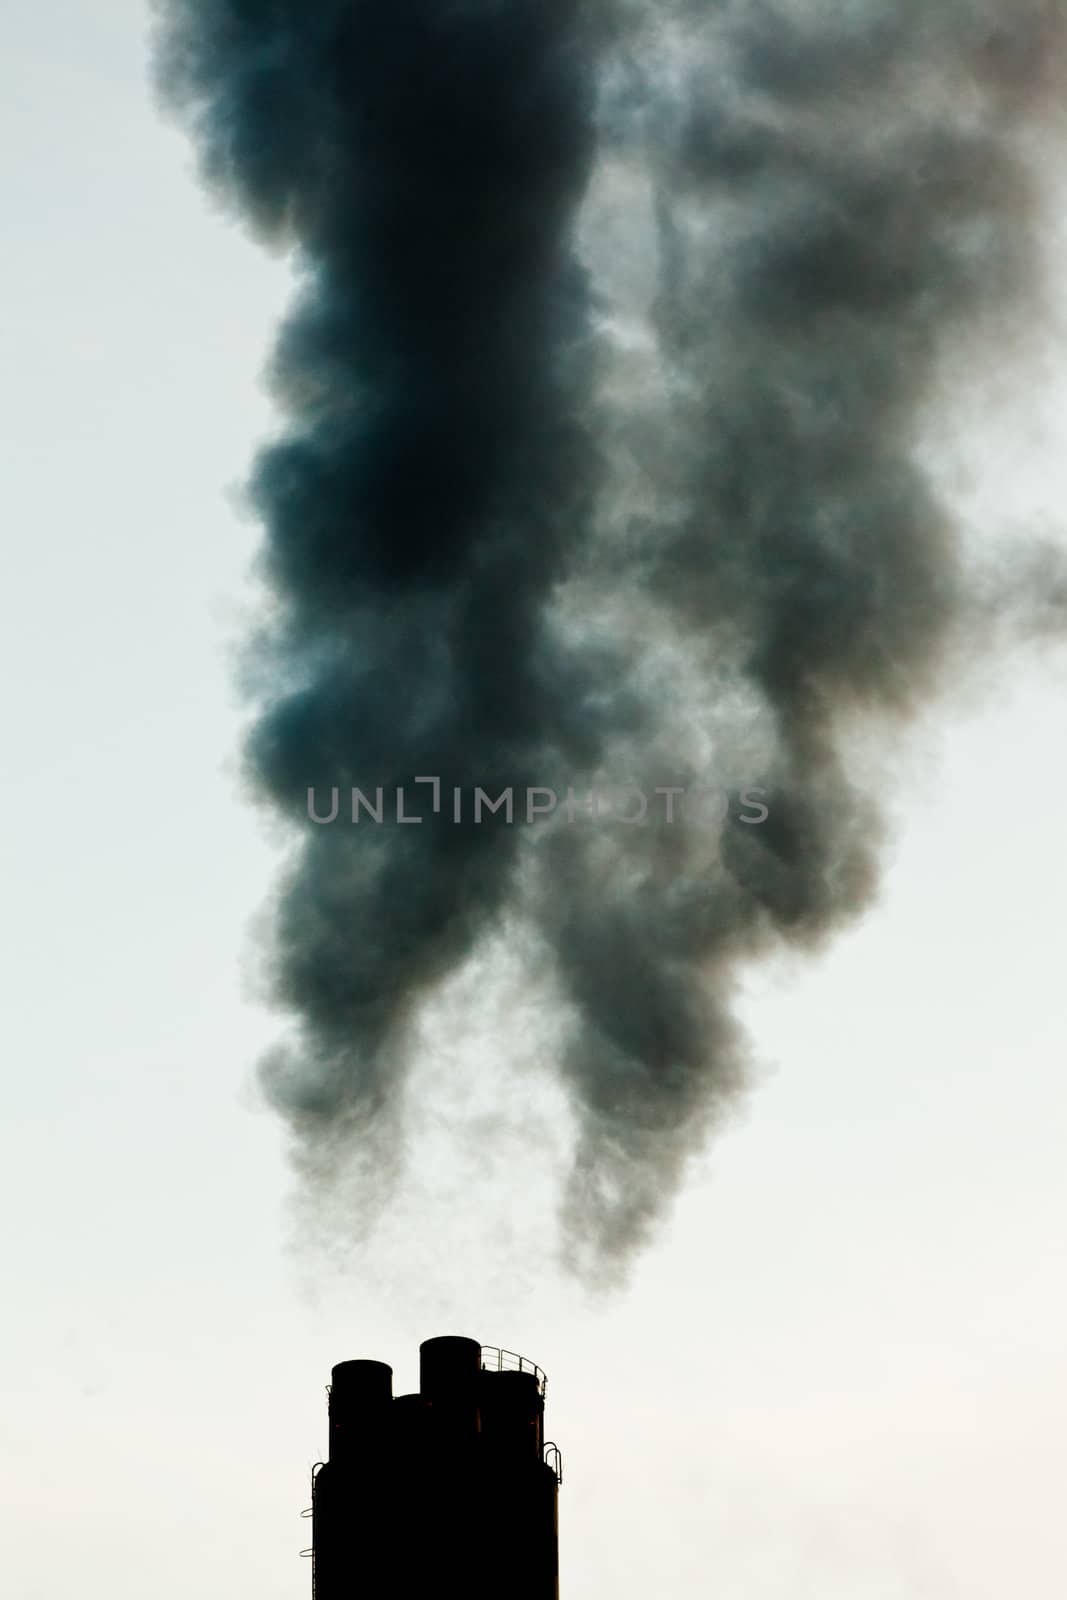 Industrial pollution chimneys black smoke emission by PiLens